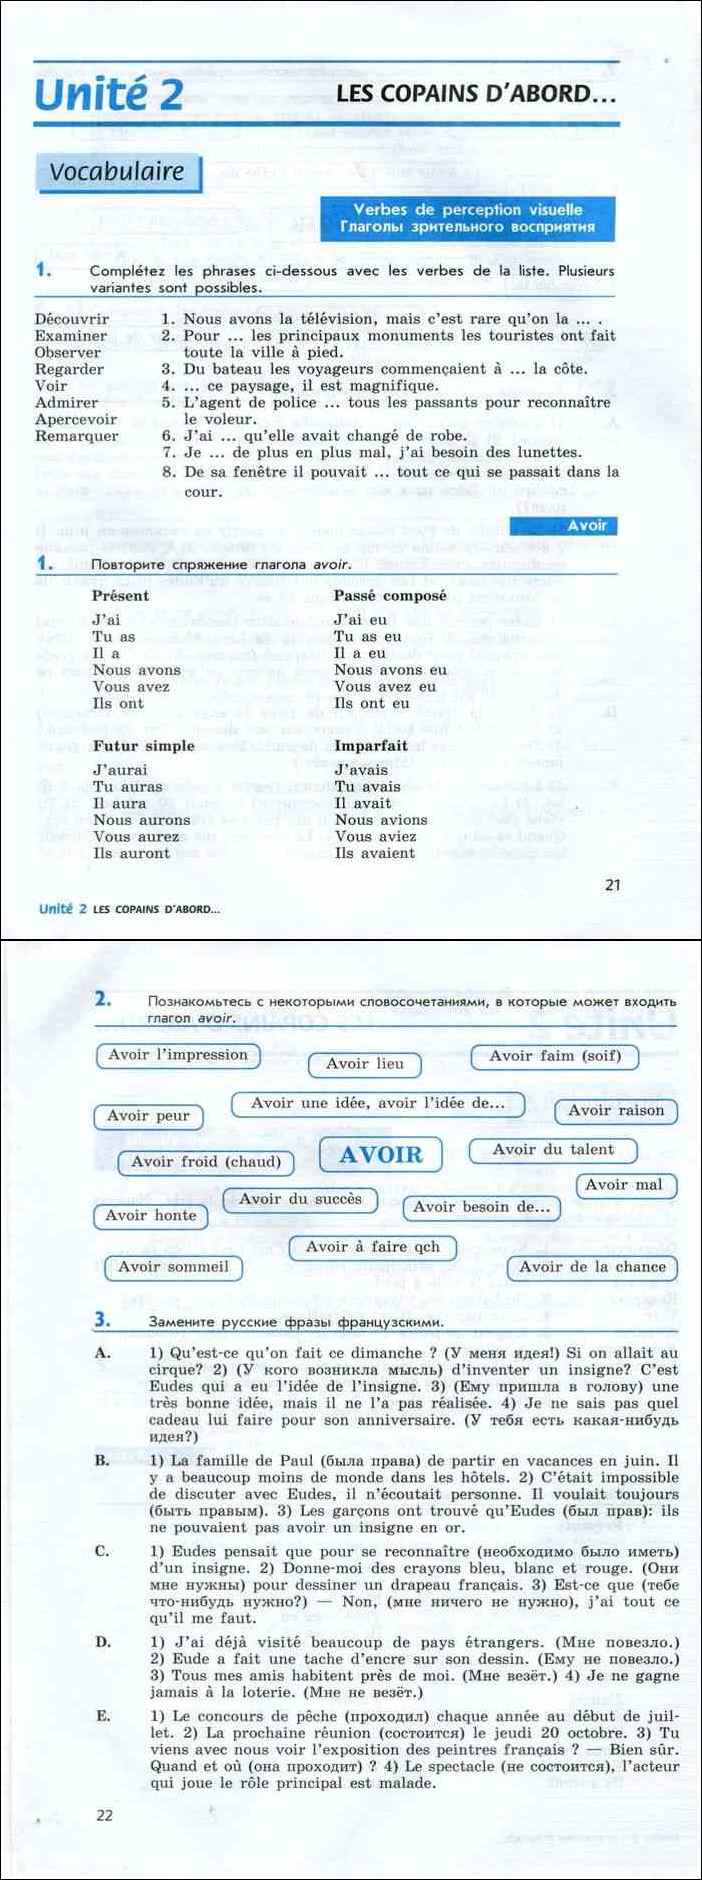 Учебник французского языка селиванова шашурина. Французский 7 класс Селиванова Шашурина.